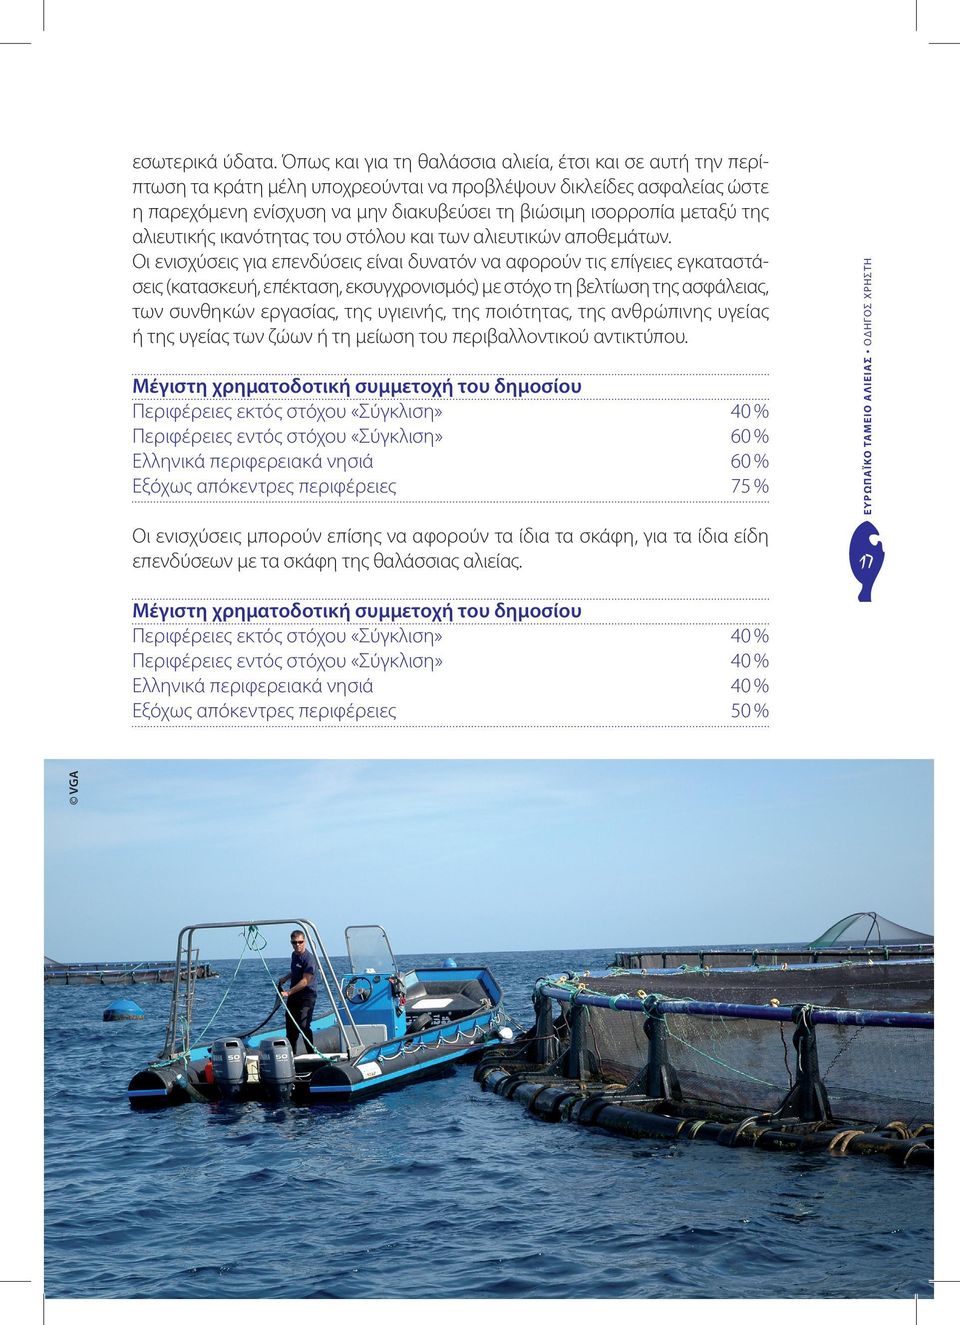 VGA Μέγιστη χρηματοδοτική συμμετοχή του δημοσίου Περιφέρειες εκτός στόχου «Σύγκλιση» Περιφέρειες εντός στόχου «Σύγκλιση» Ελληνικά περιφερειακά νησιά Εξόχως απόκεντρες περιφέρειες 40 % 40 % 40 % 50 %